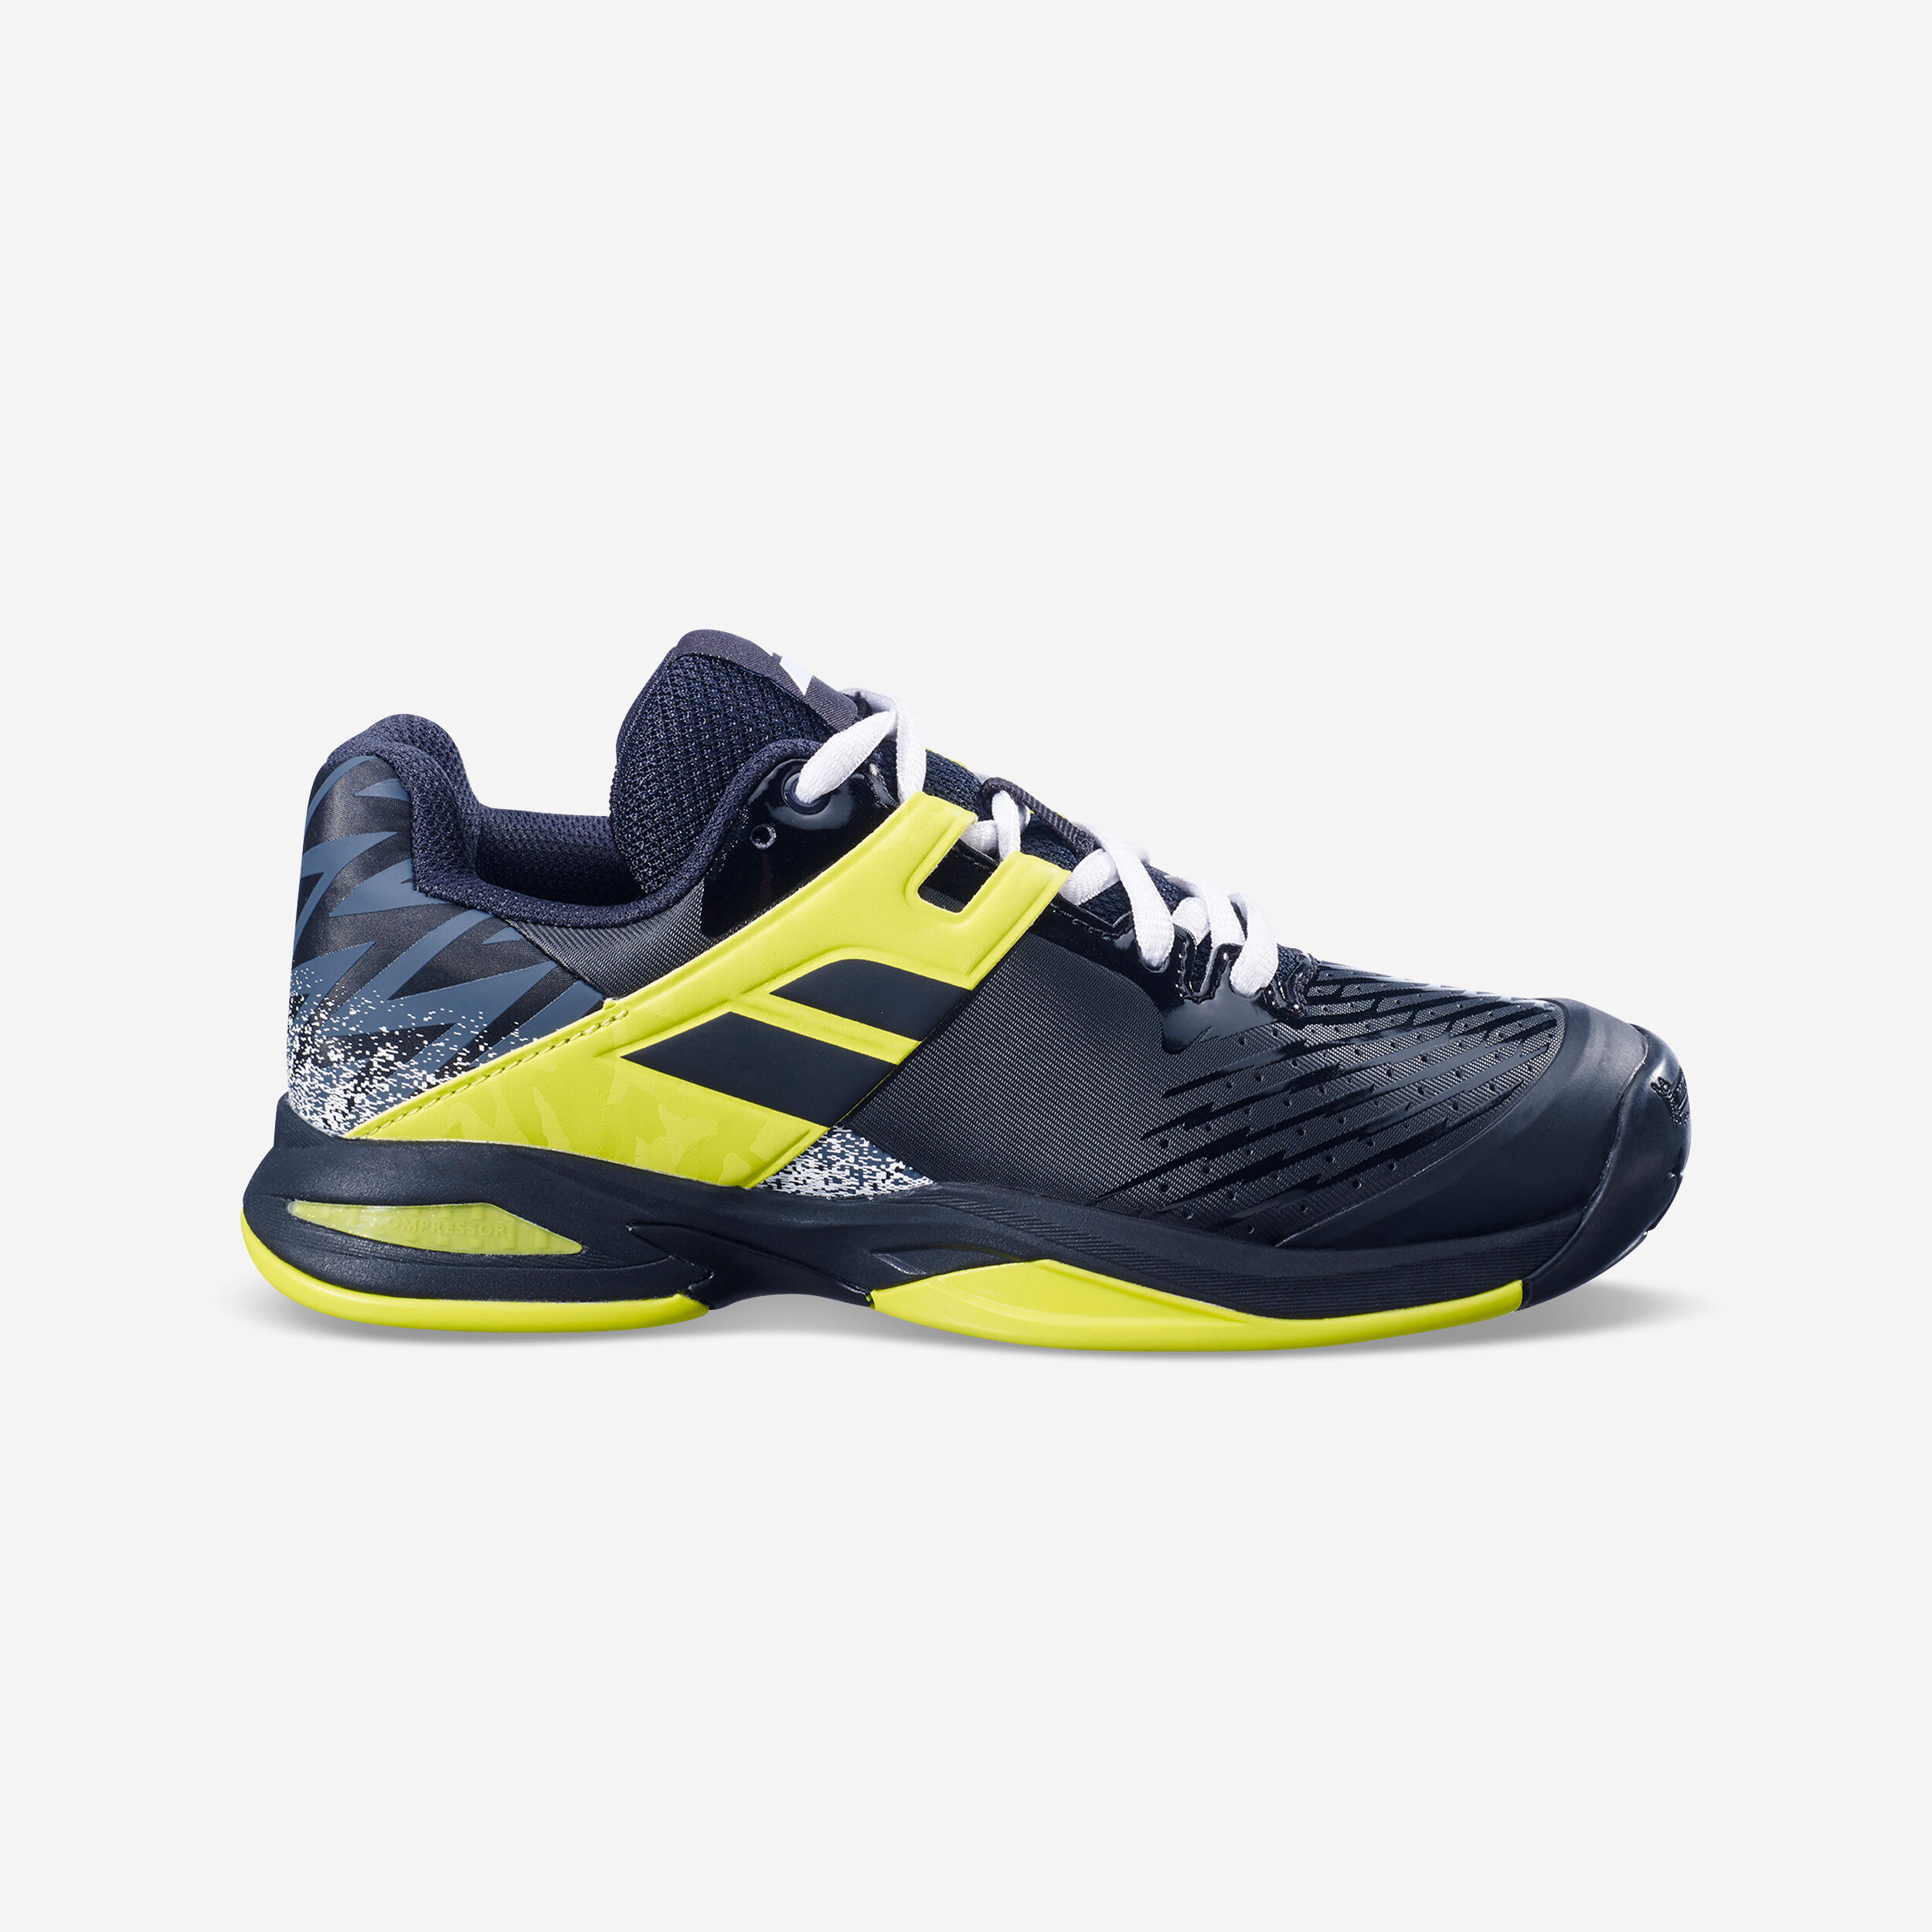 Kids' Multicourt Tennis Shoes Propulse - Black/Yellow 1/4